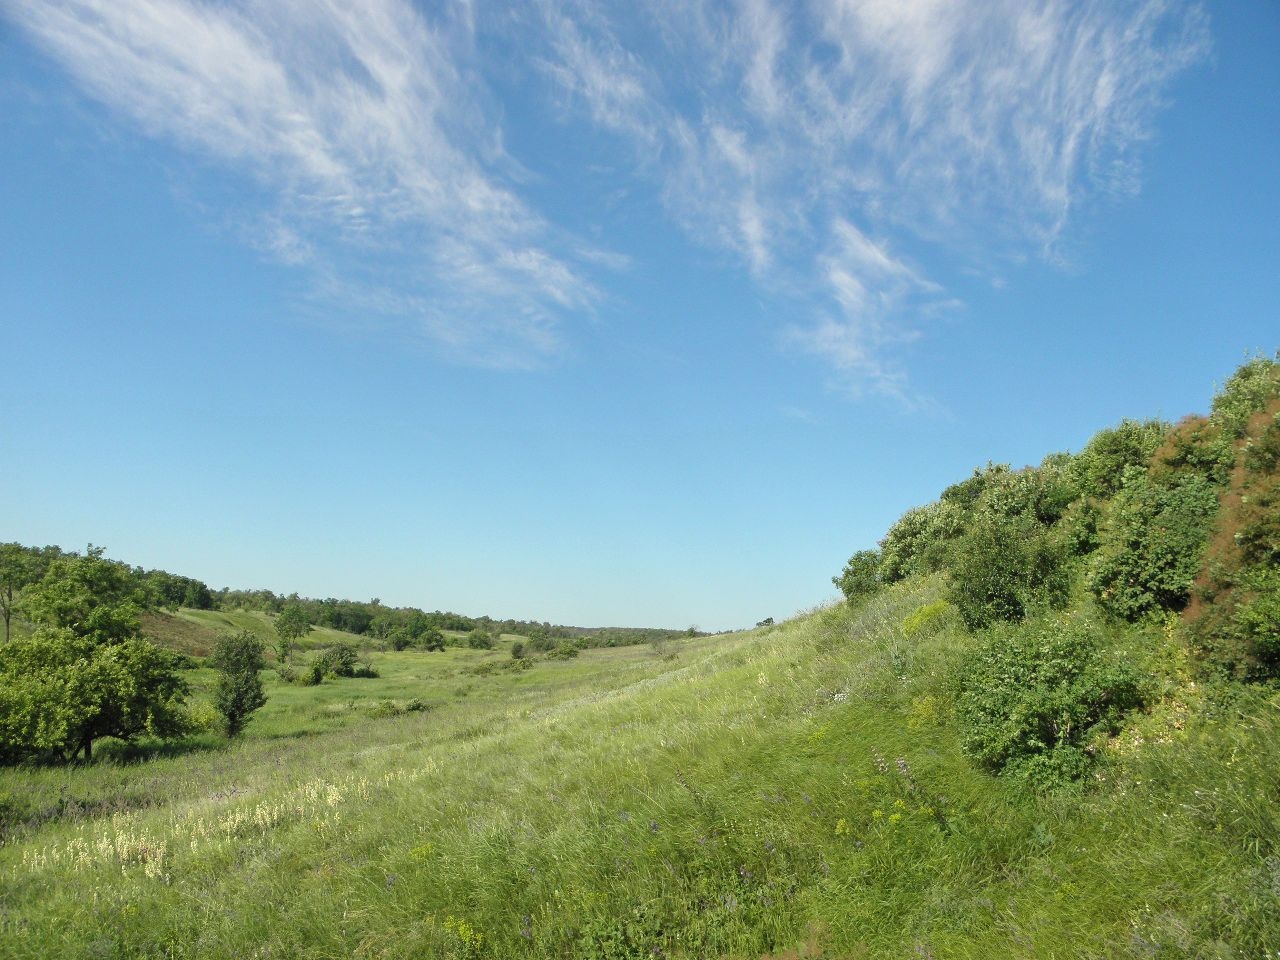 Калмыцкий Яр, image of landscape/habitat.